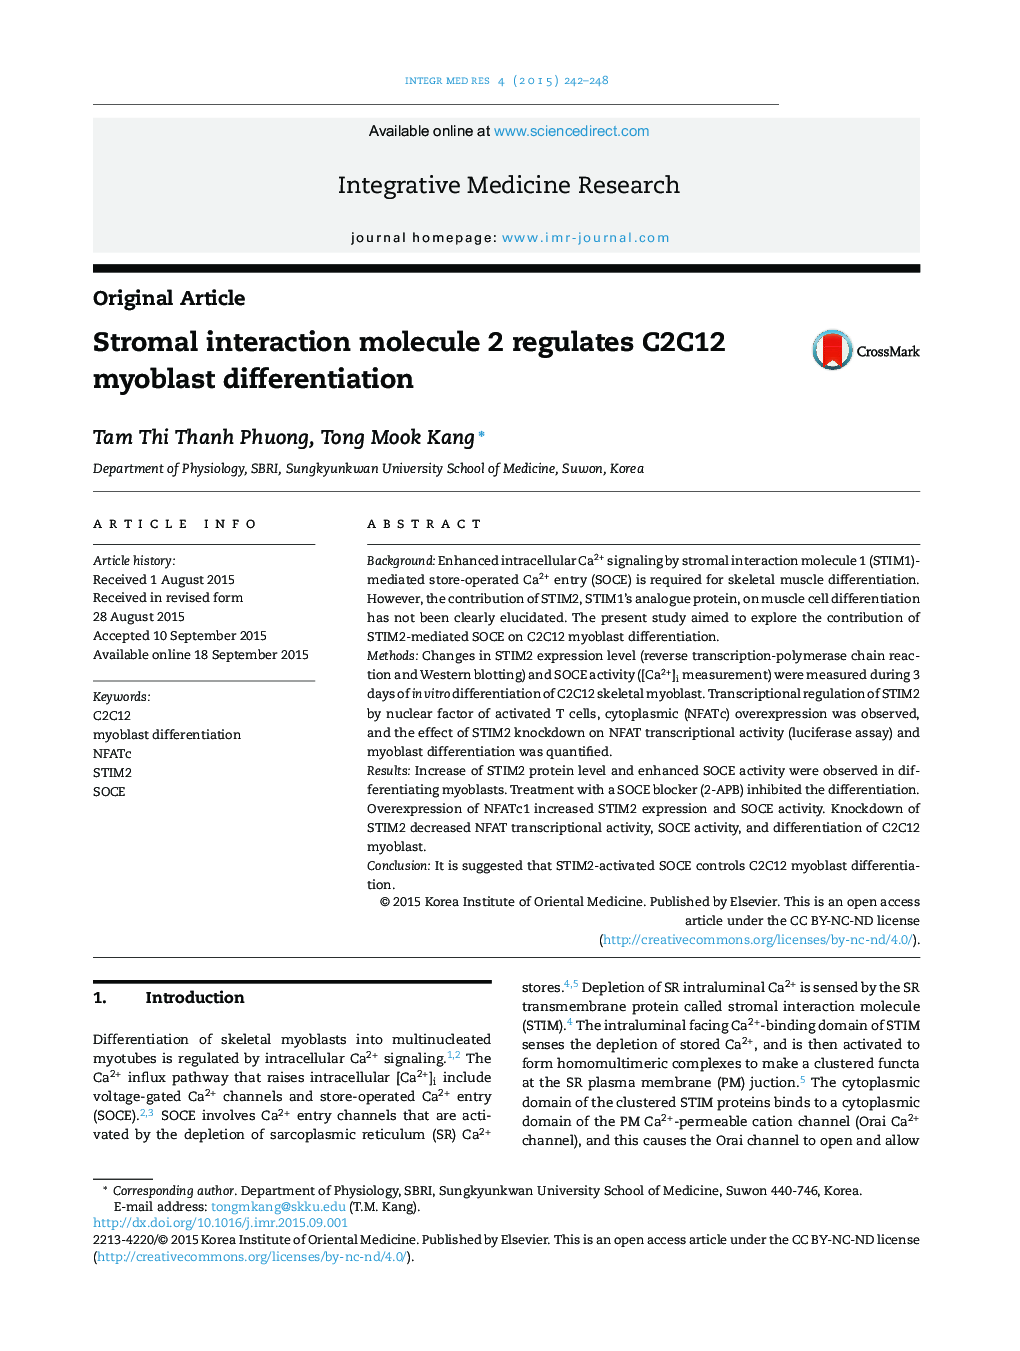 Stromal interaction molecule 2 regulates C2C12 myoblast differentiation